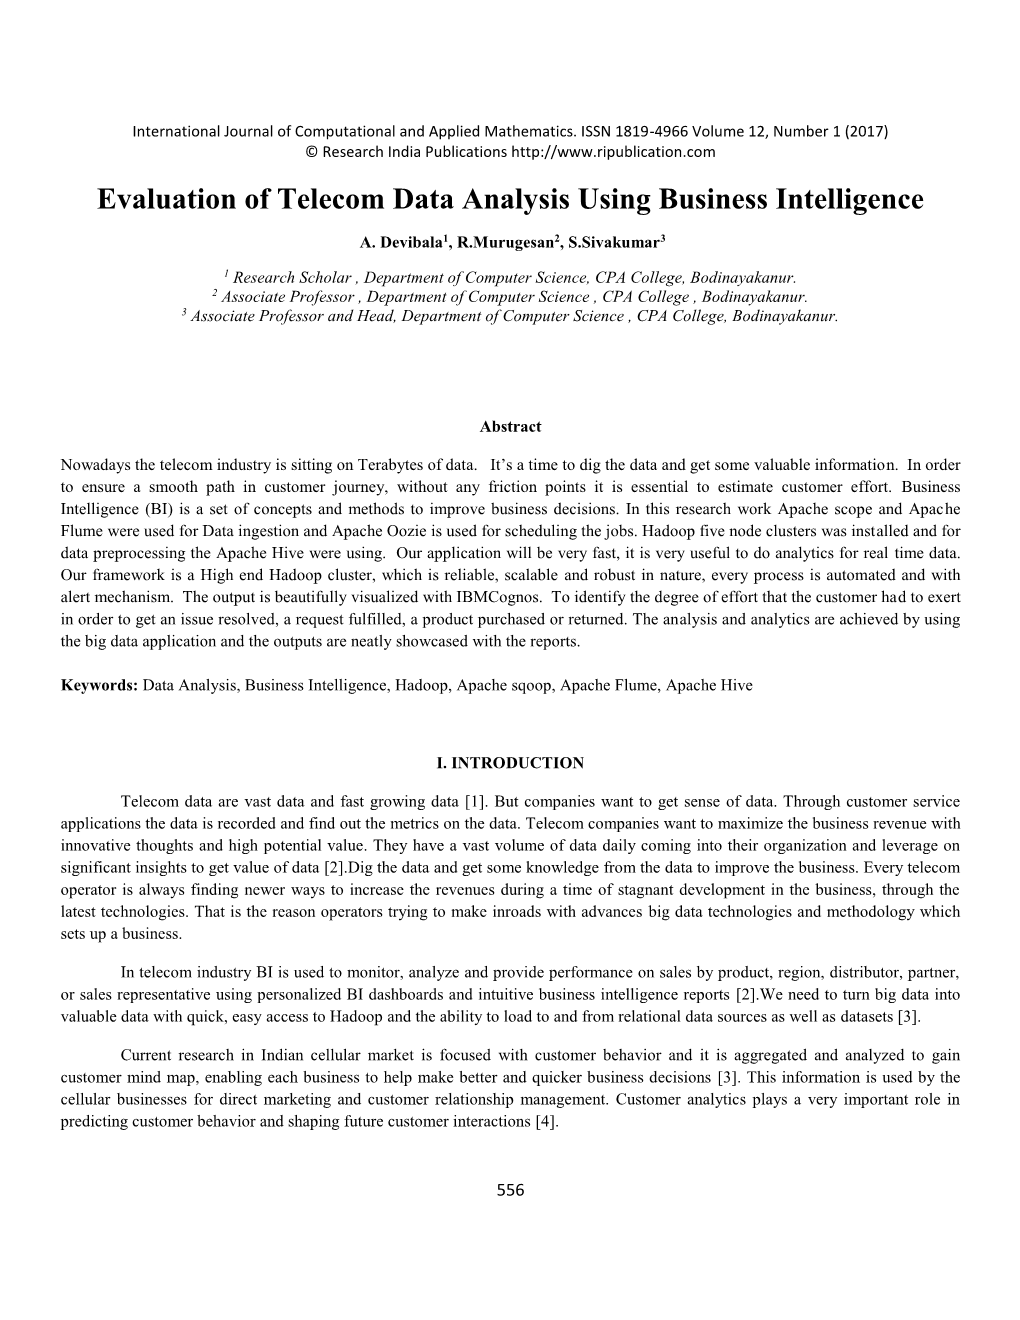 Evaluation of Telecom Data Analysis Using Business Intelligence